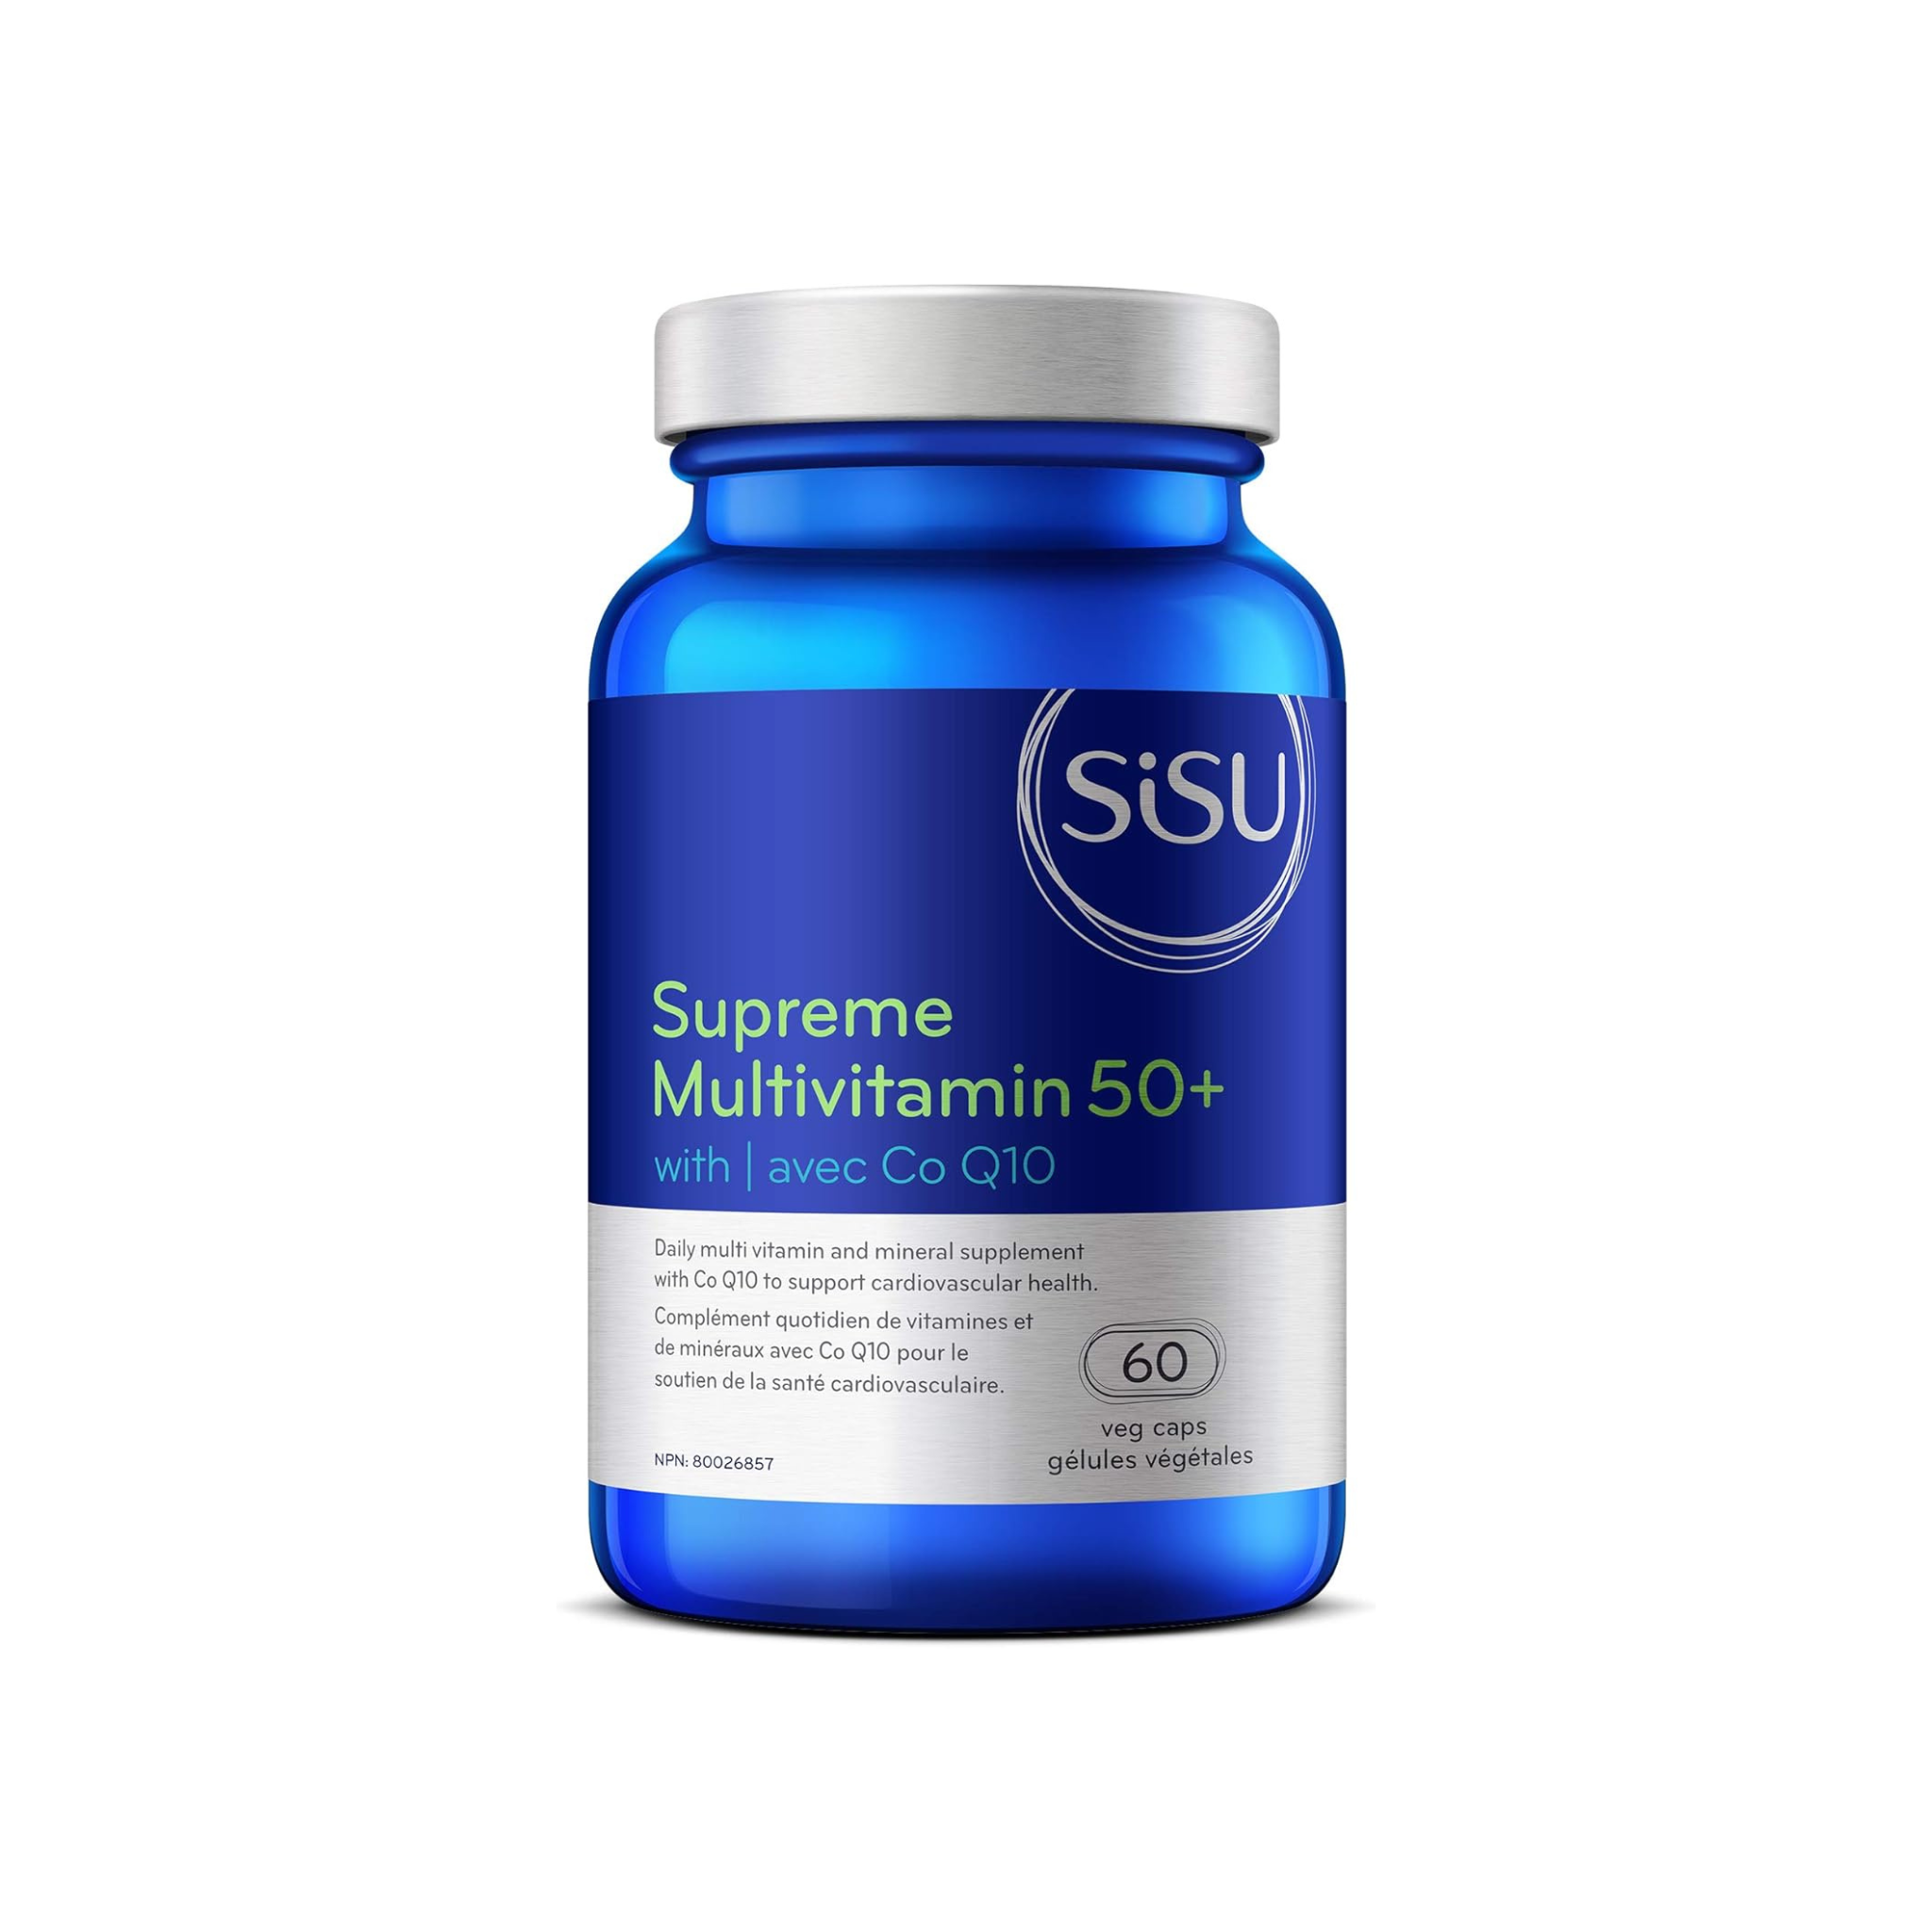 SISU Supreme Multivitamin 50+